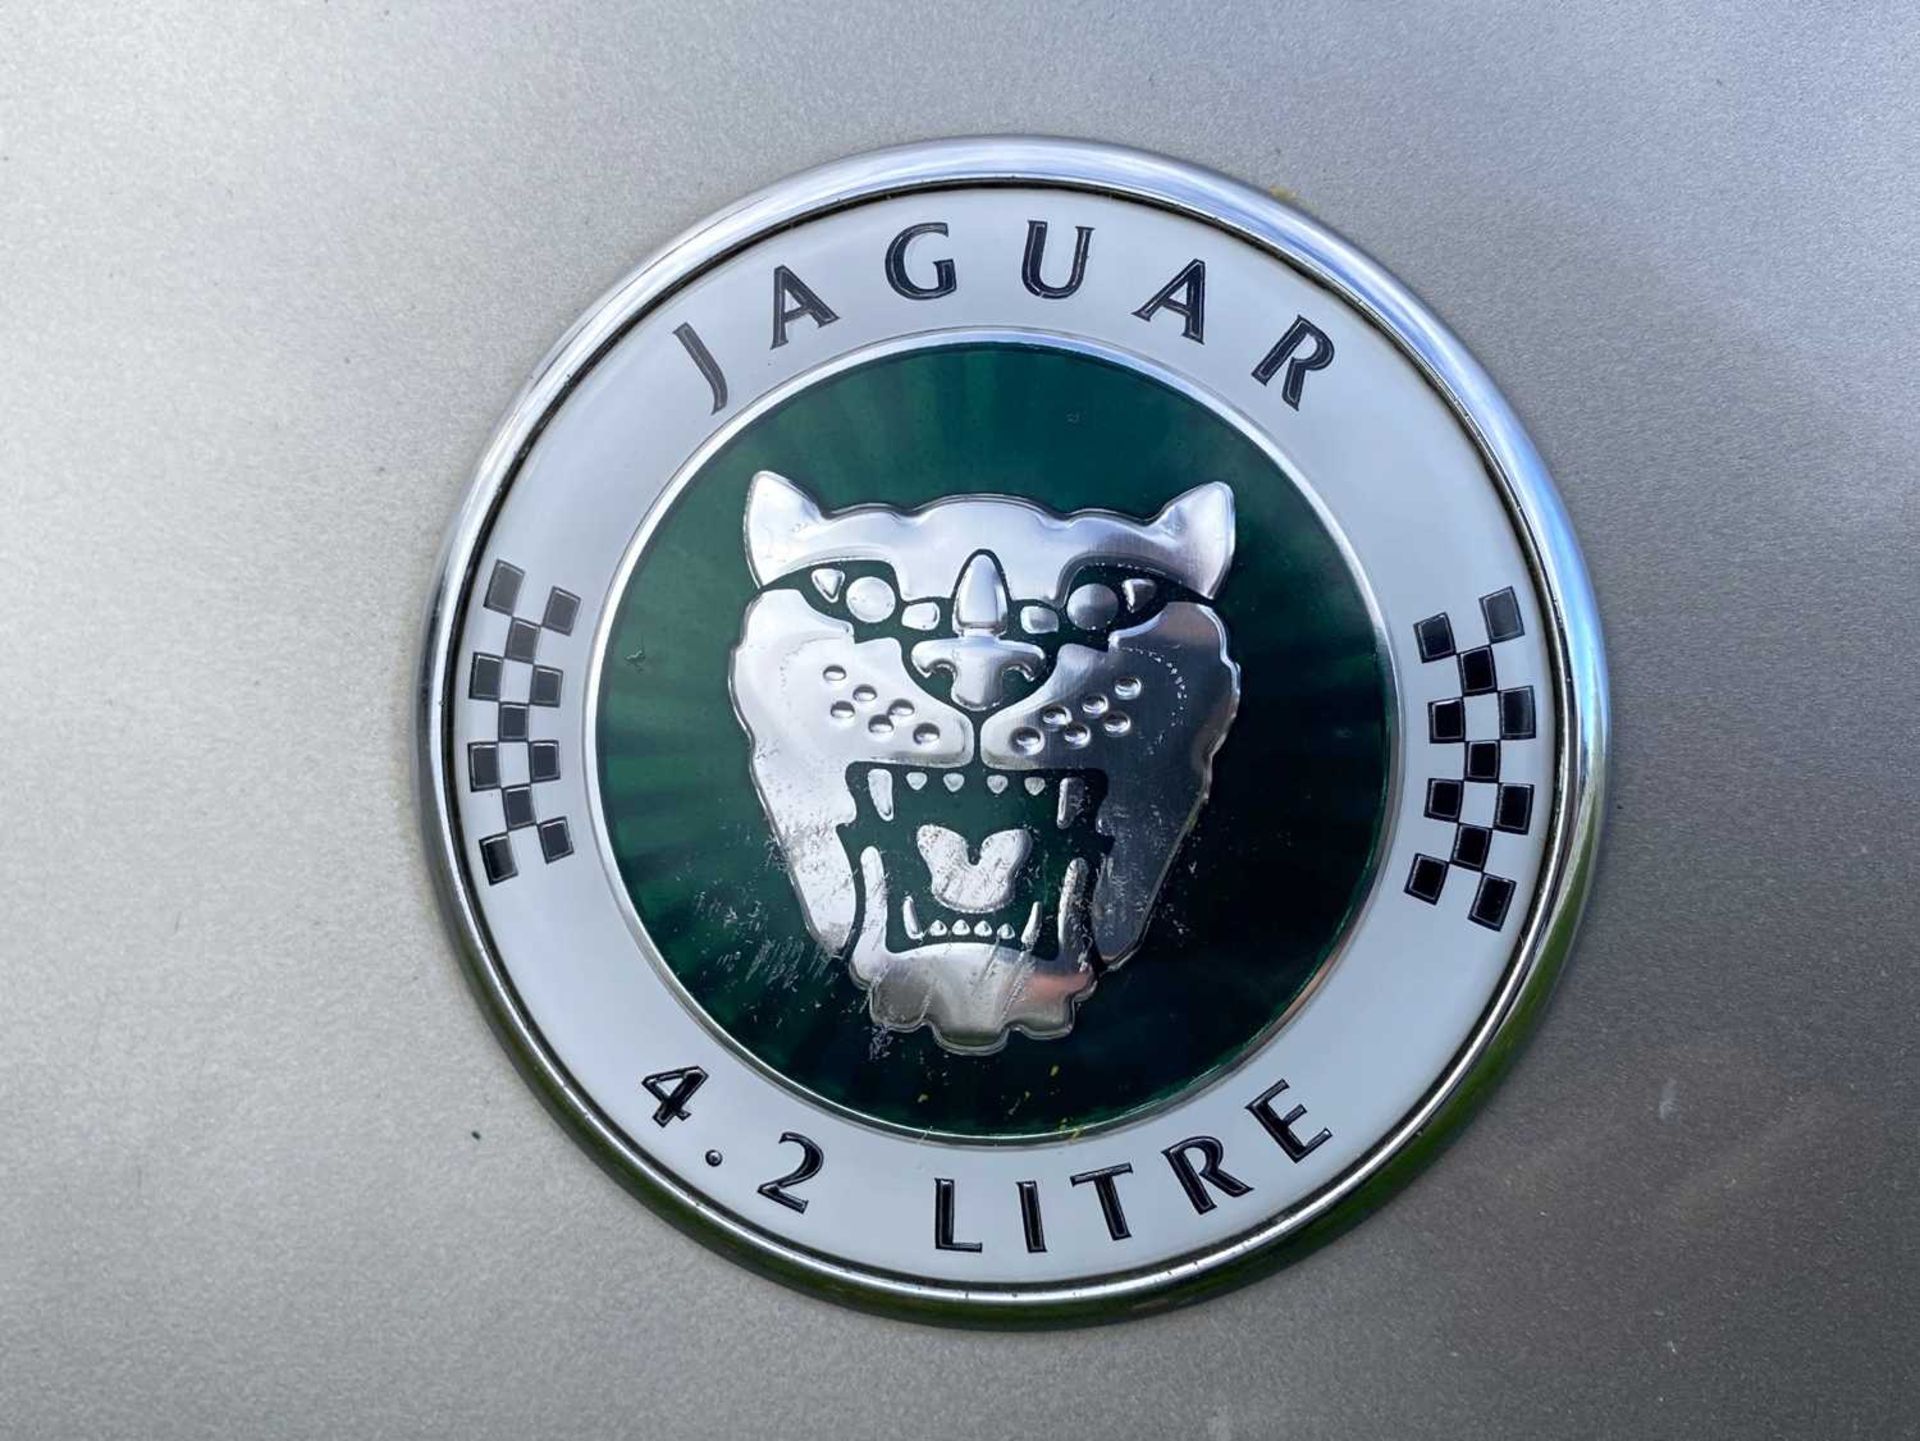 2005 Jaguar XK8 4.2 S Convertible Rare, limited edition model - Image 85 of 100